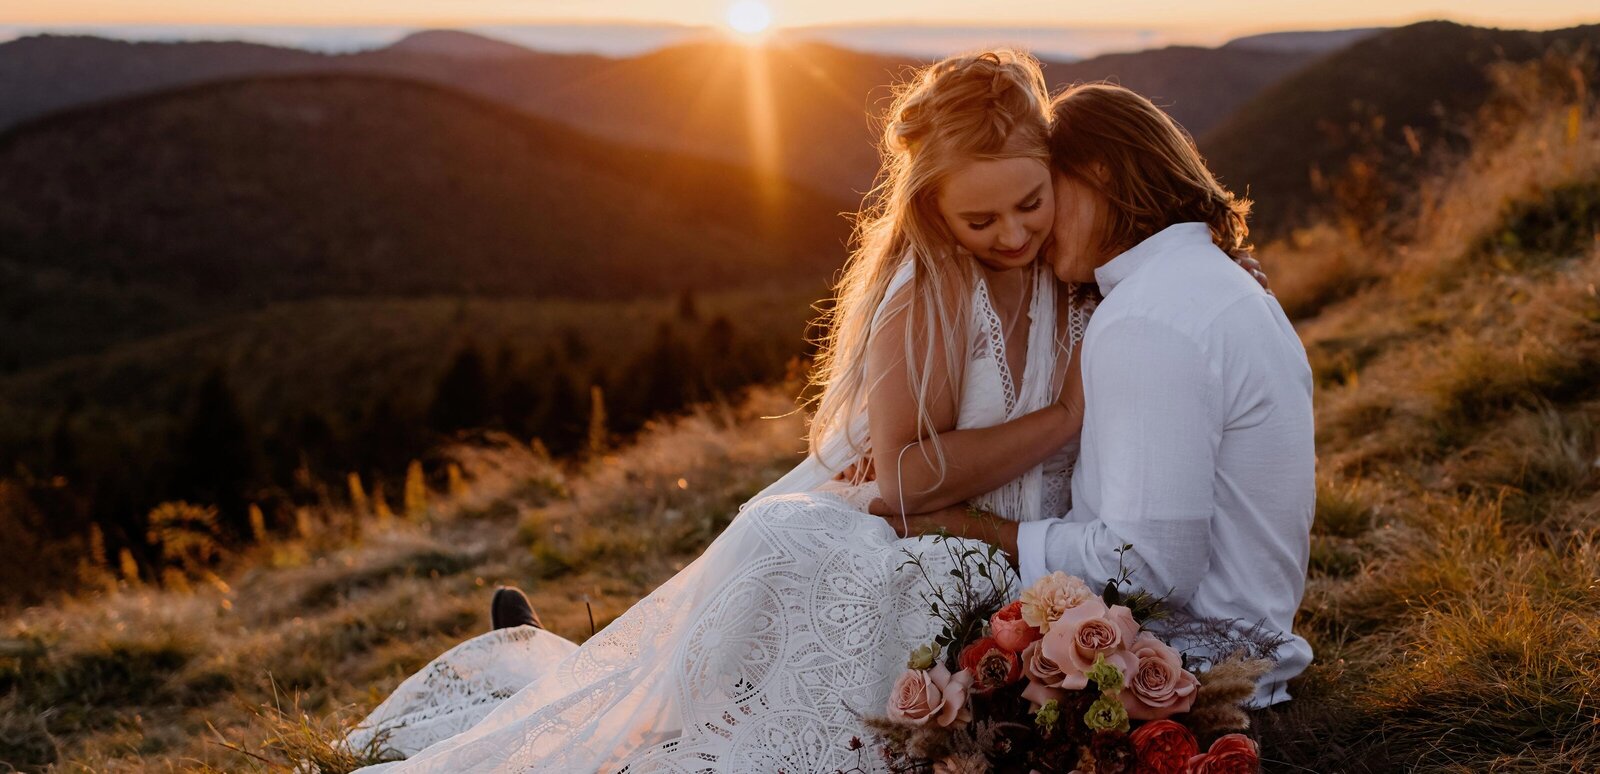 Sunset elopement photograph in Asheville